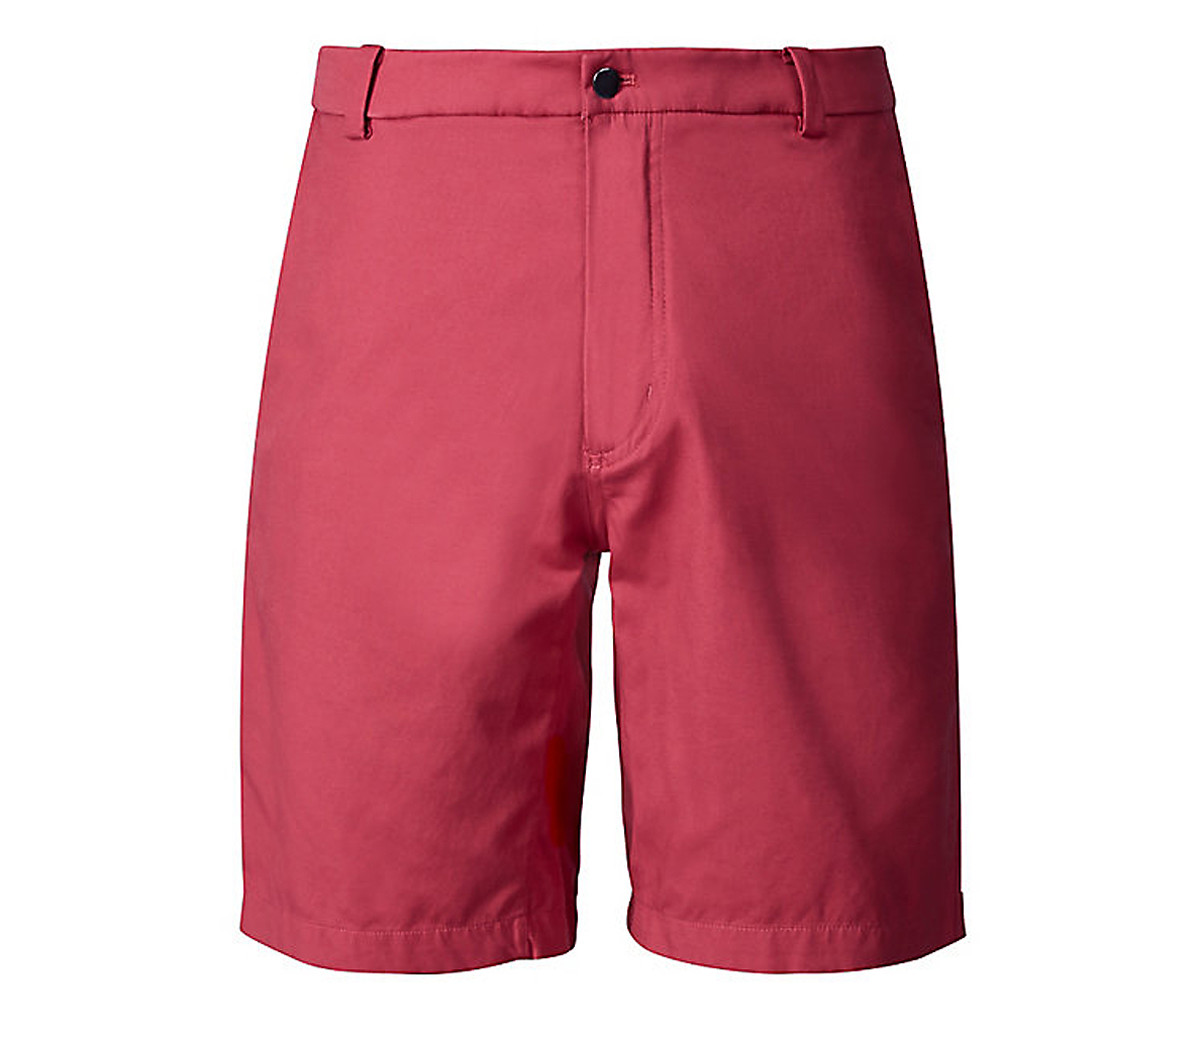 Best Shorts for Men to Wear in the Summer Heat - Men's Journal